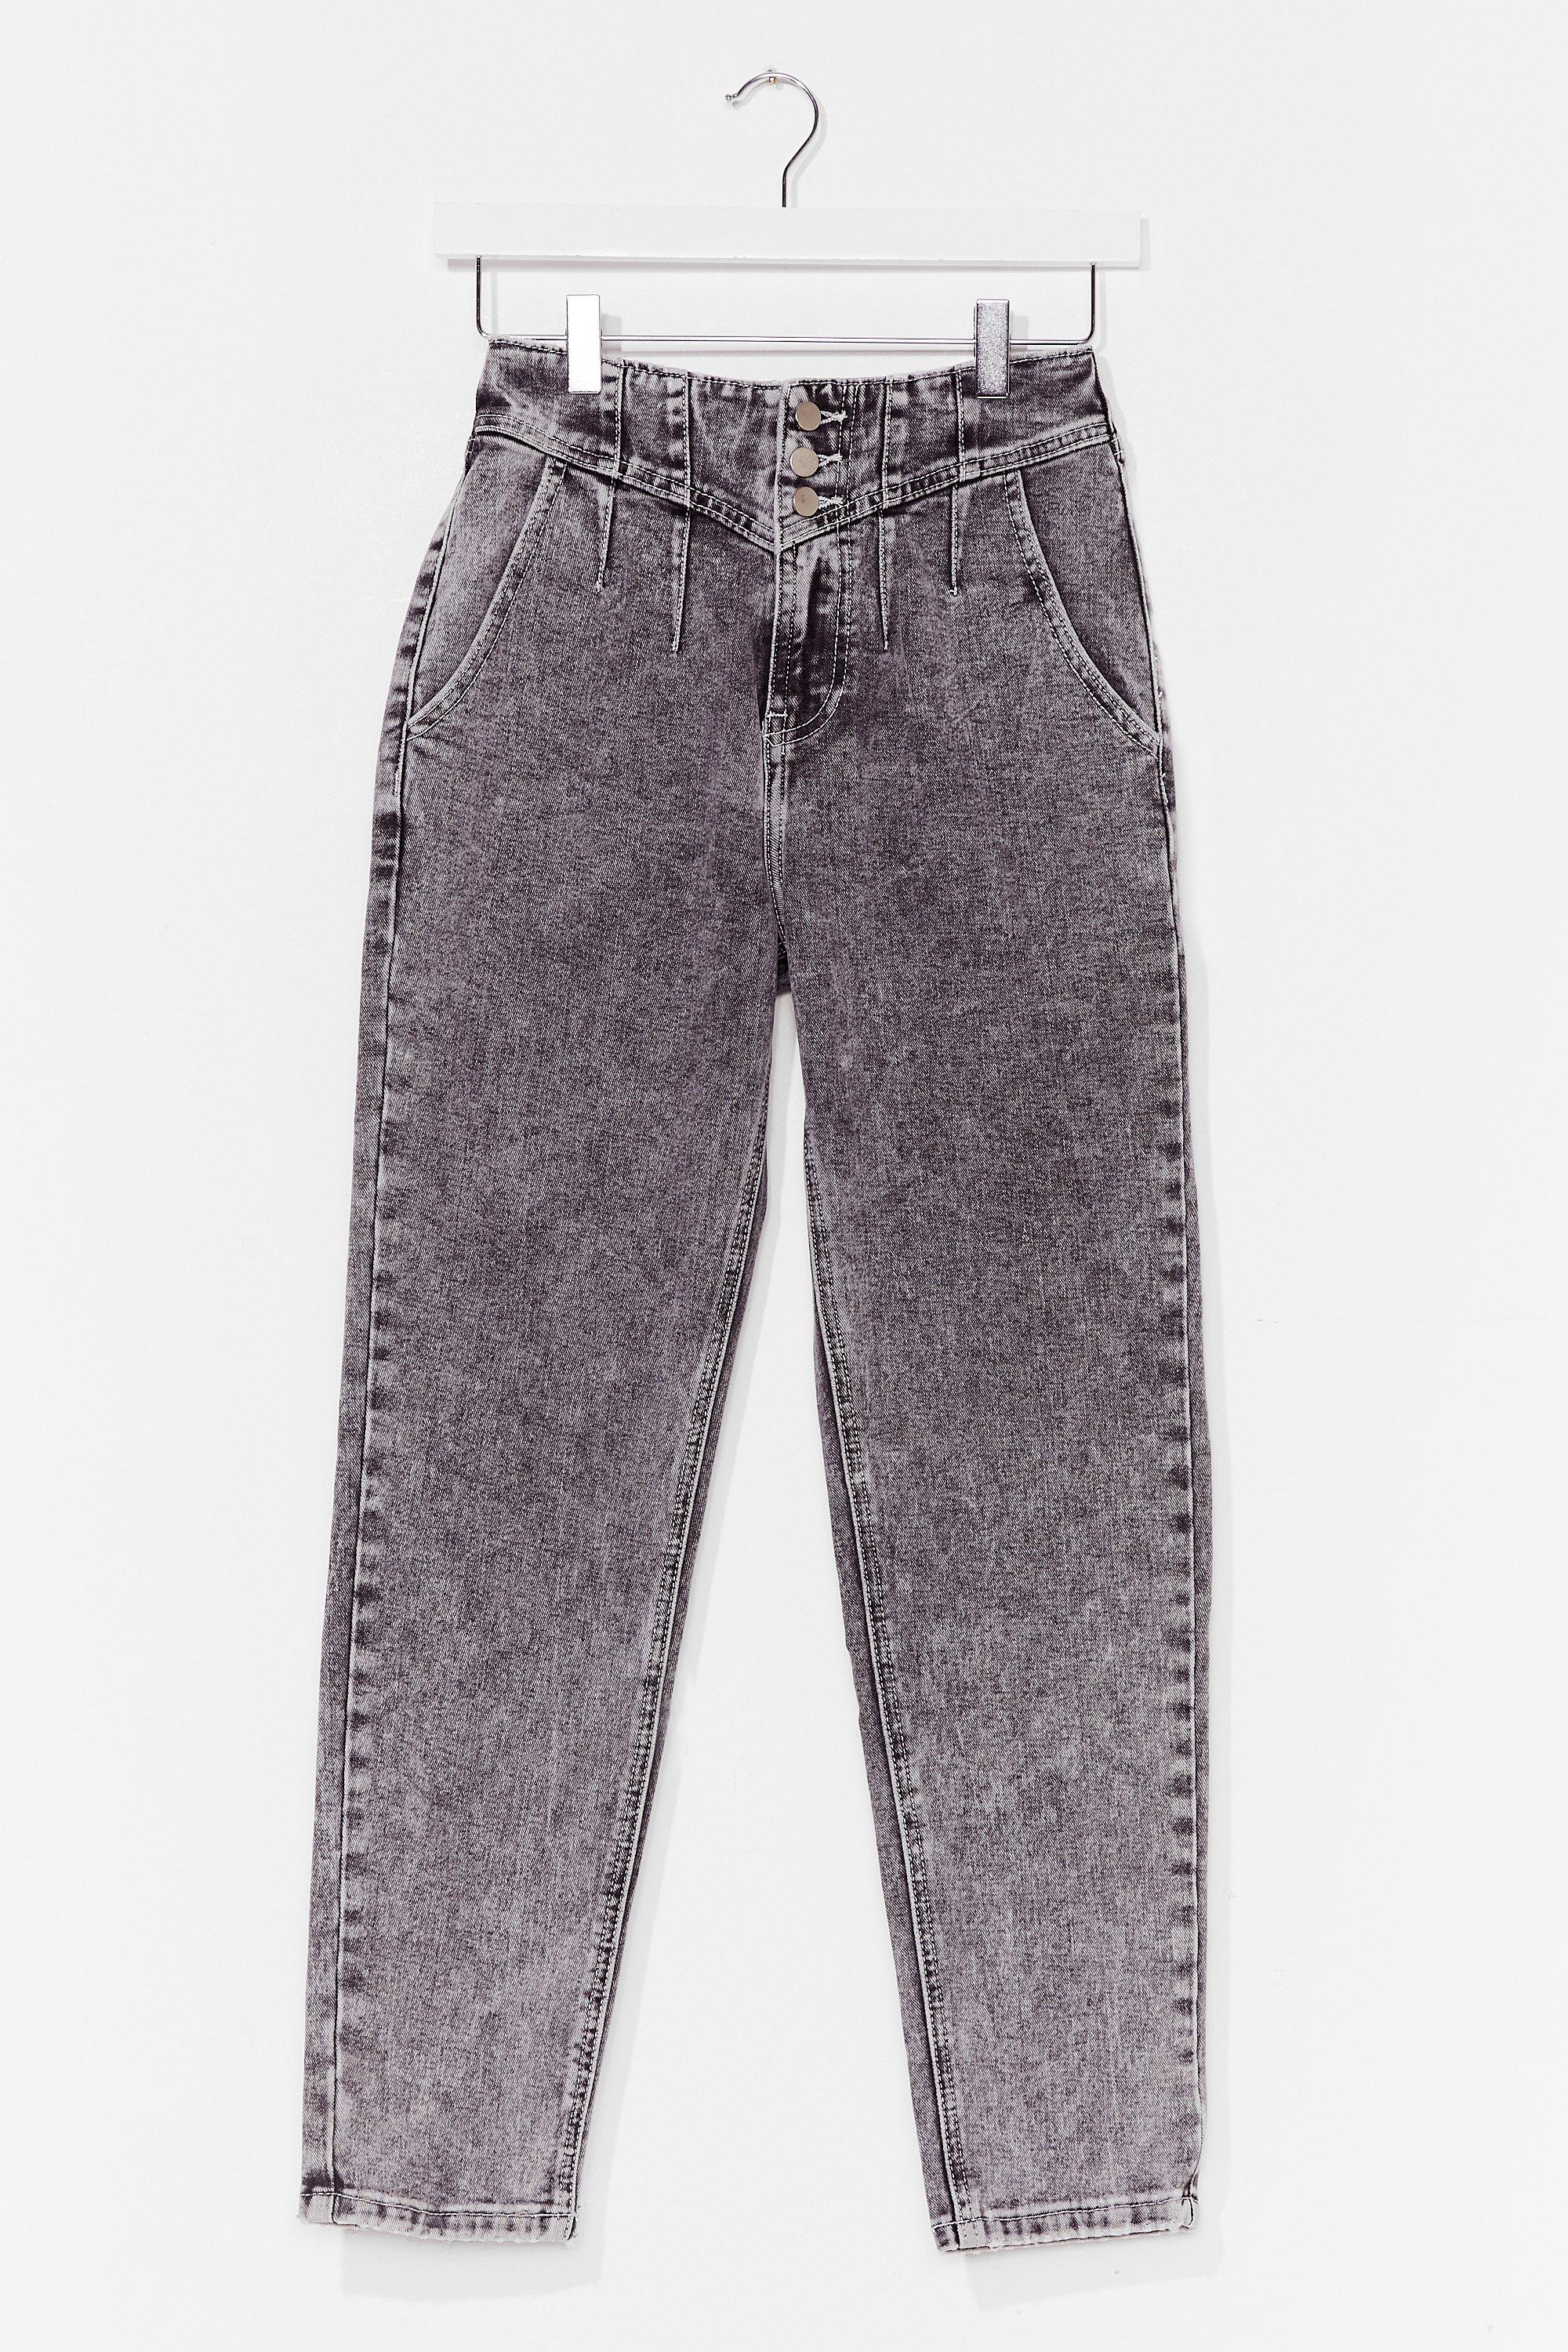 grey mom jeans